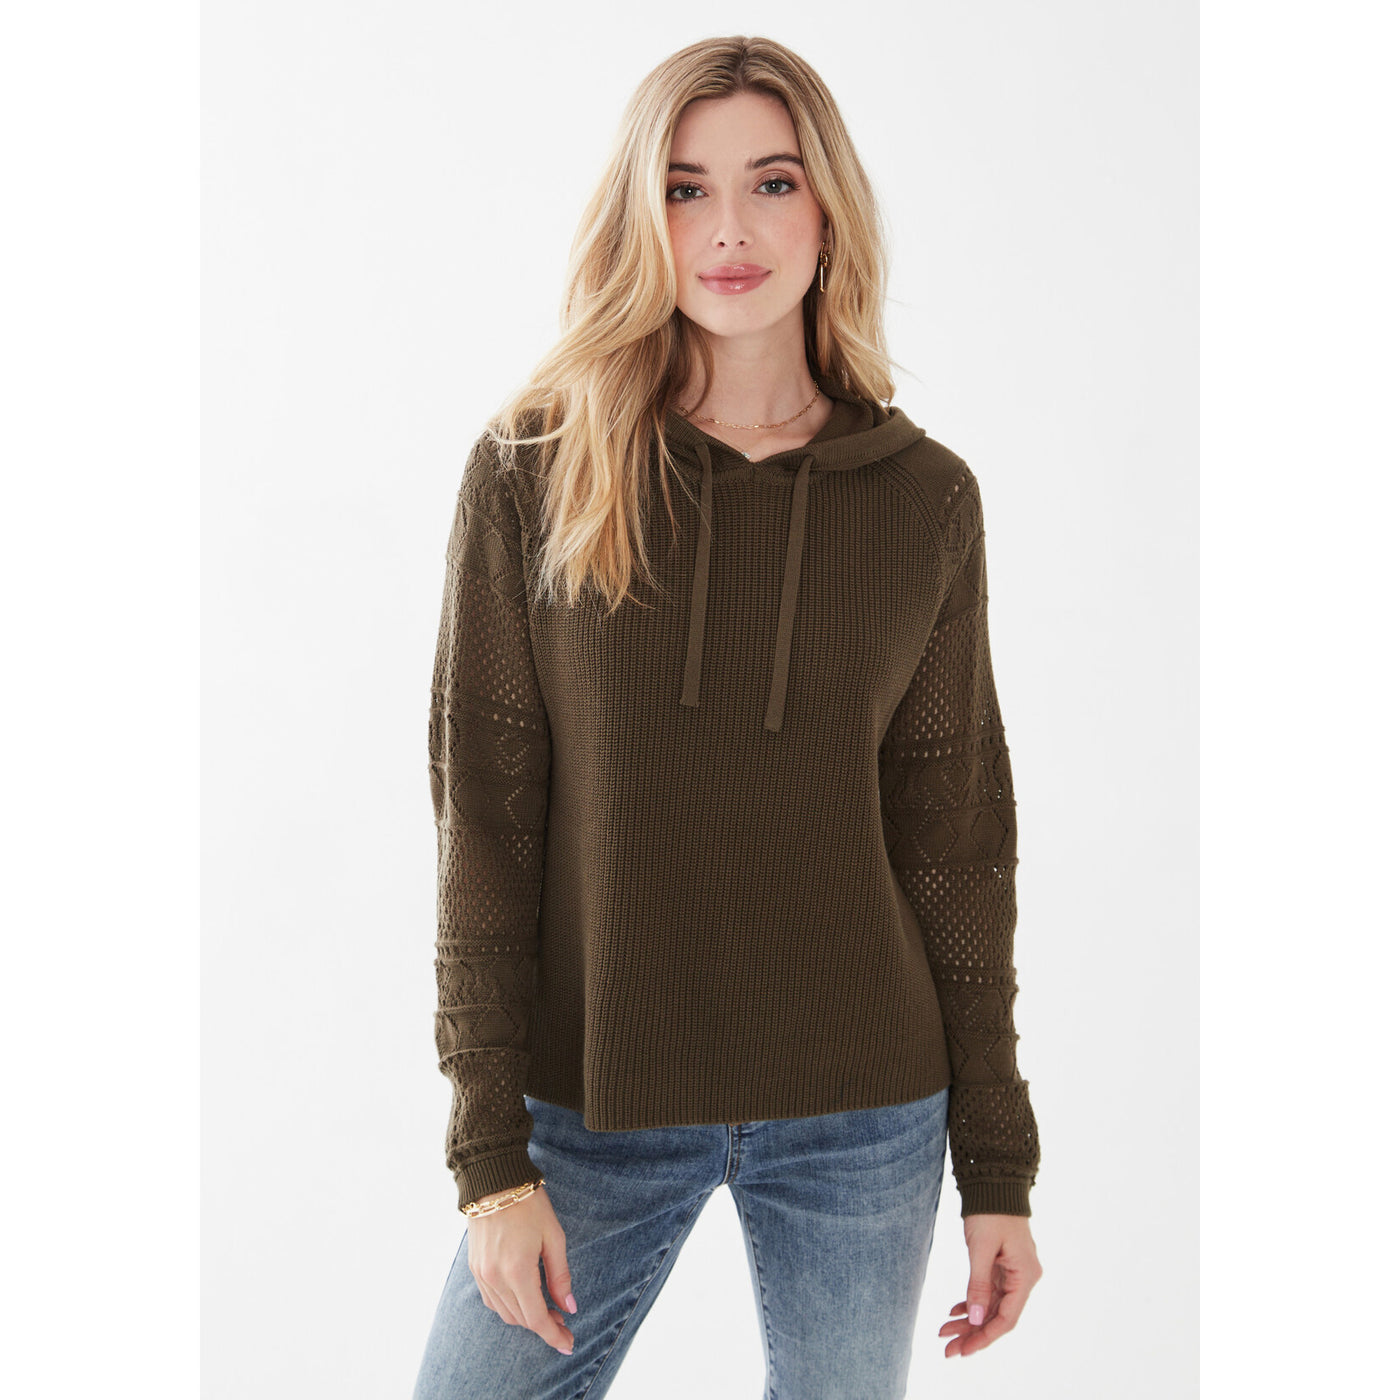 Crochet Sleeve Sweater (Olive)